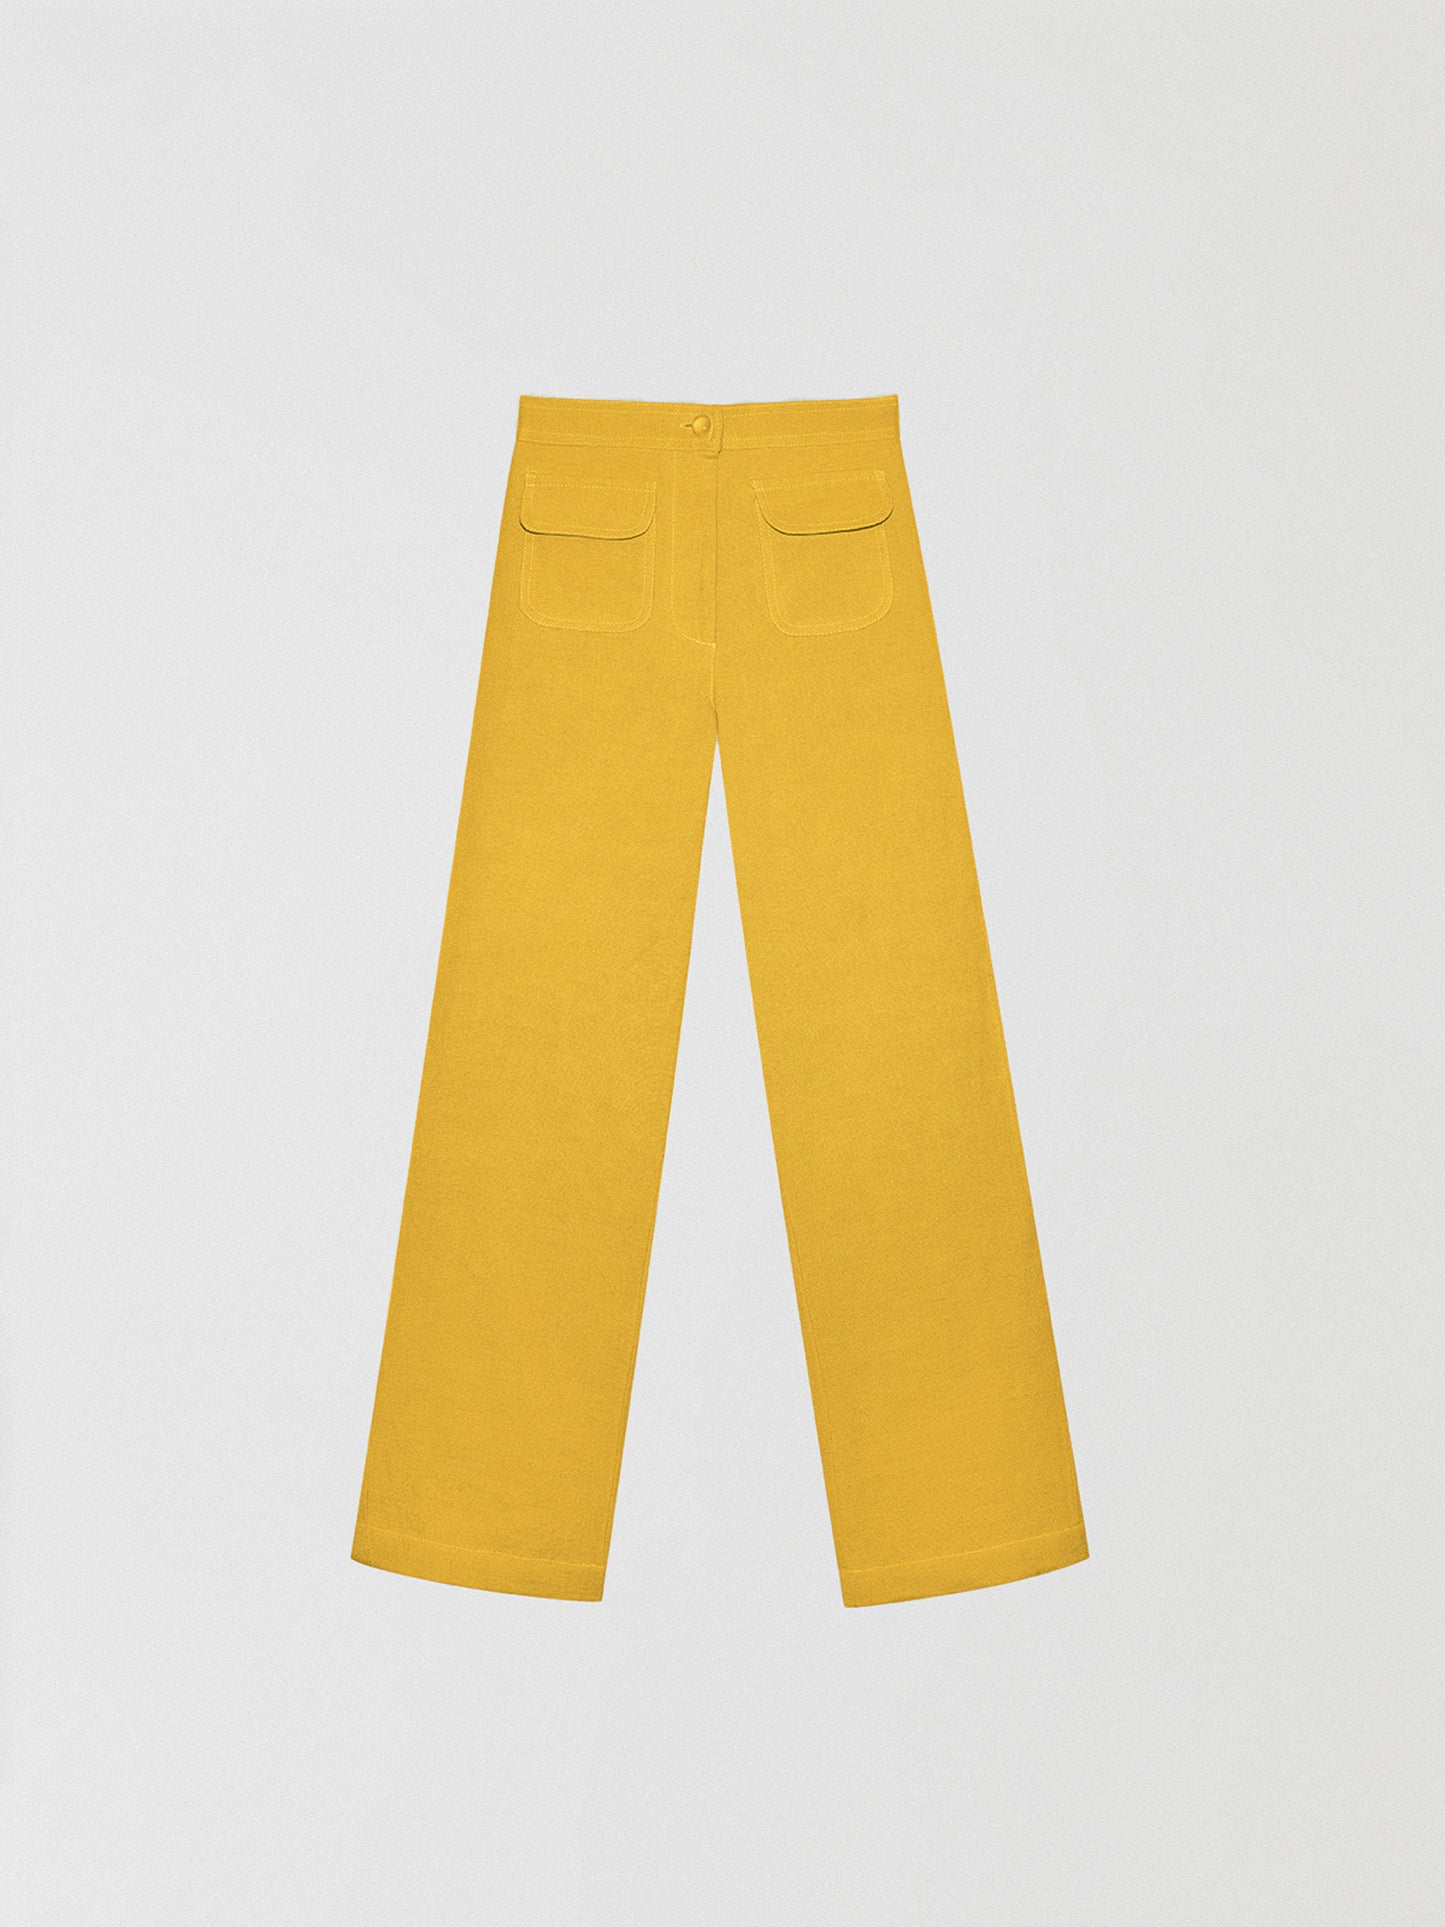 Loto Yellow Pants – La Veste